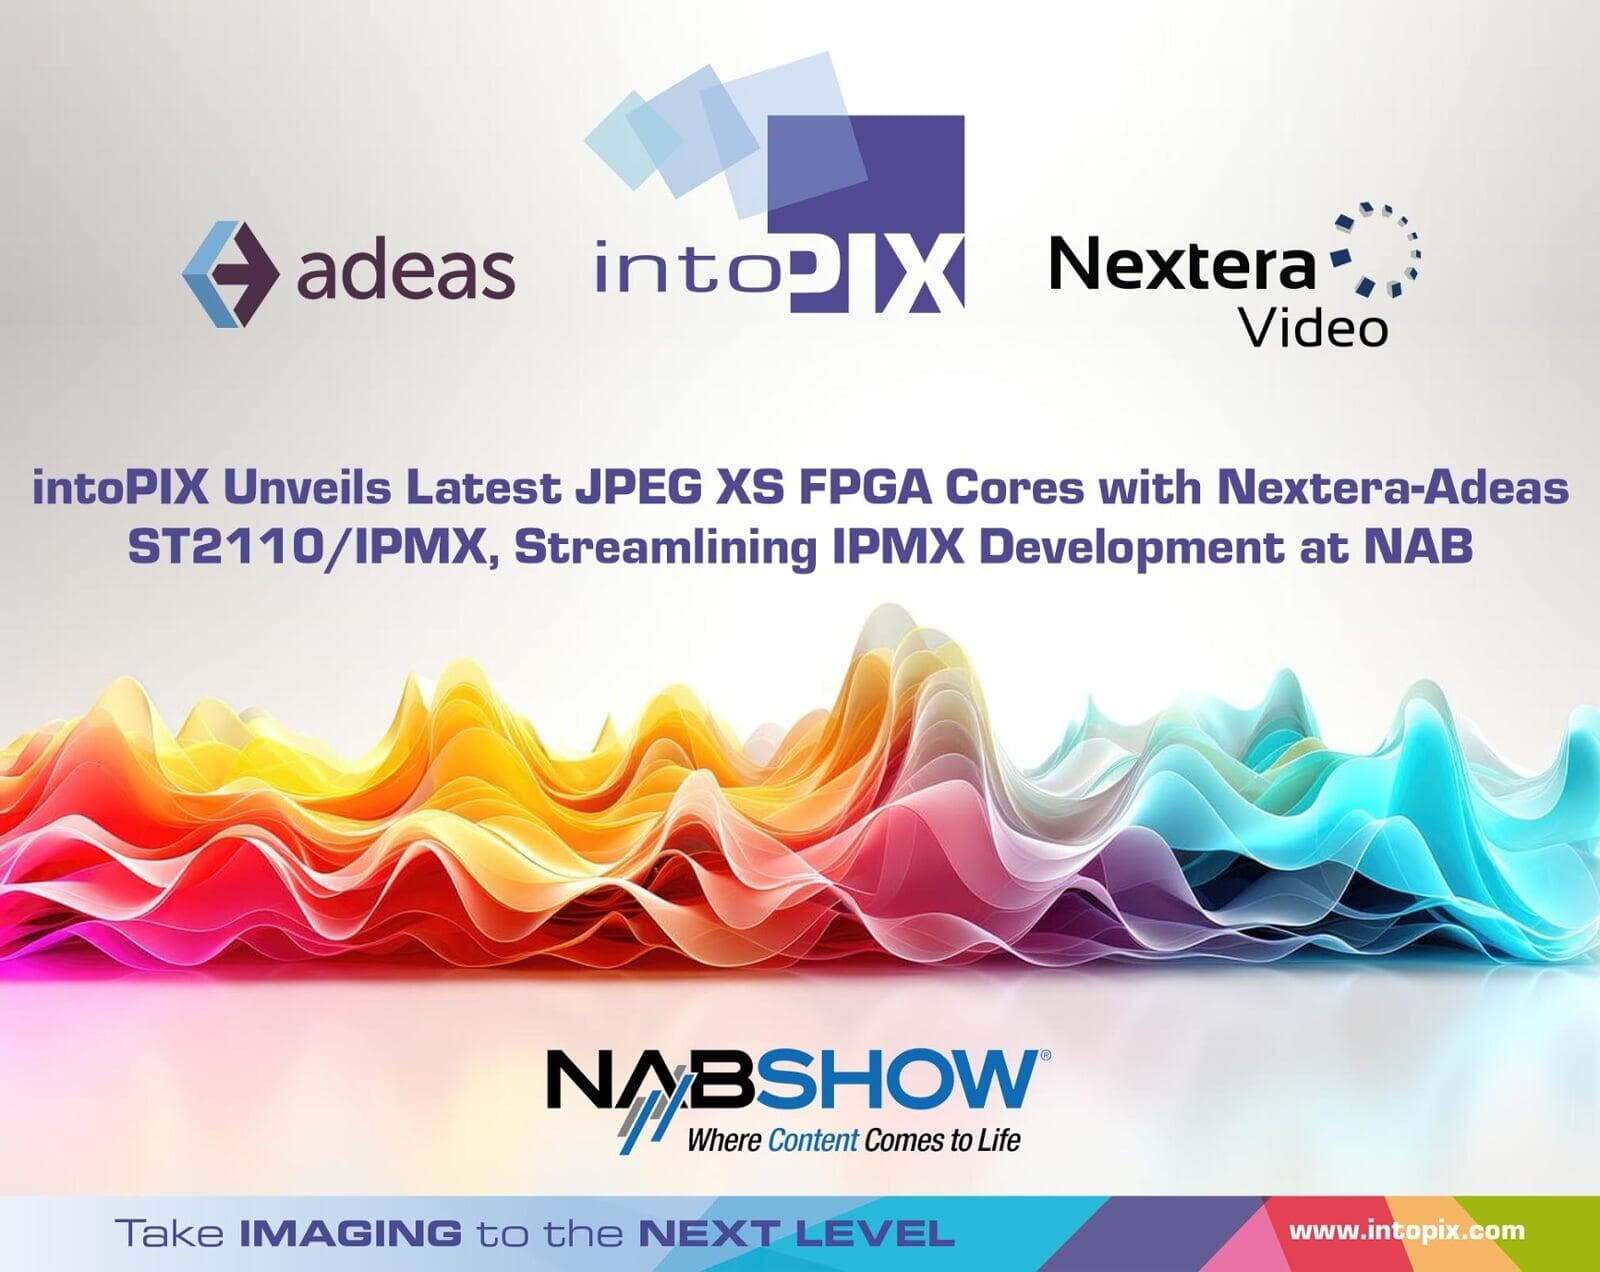 intoPIX Unveils Latest JPEG XS FPGA Cores with Nextera-Adeas ST2110/IPMX, Streamlining IPMX Development at NAB Show